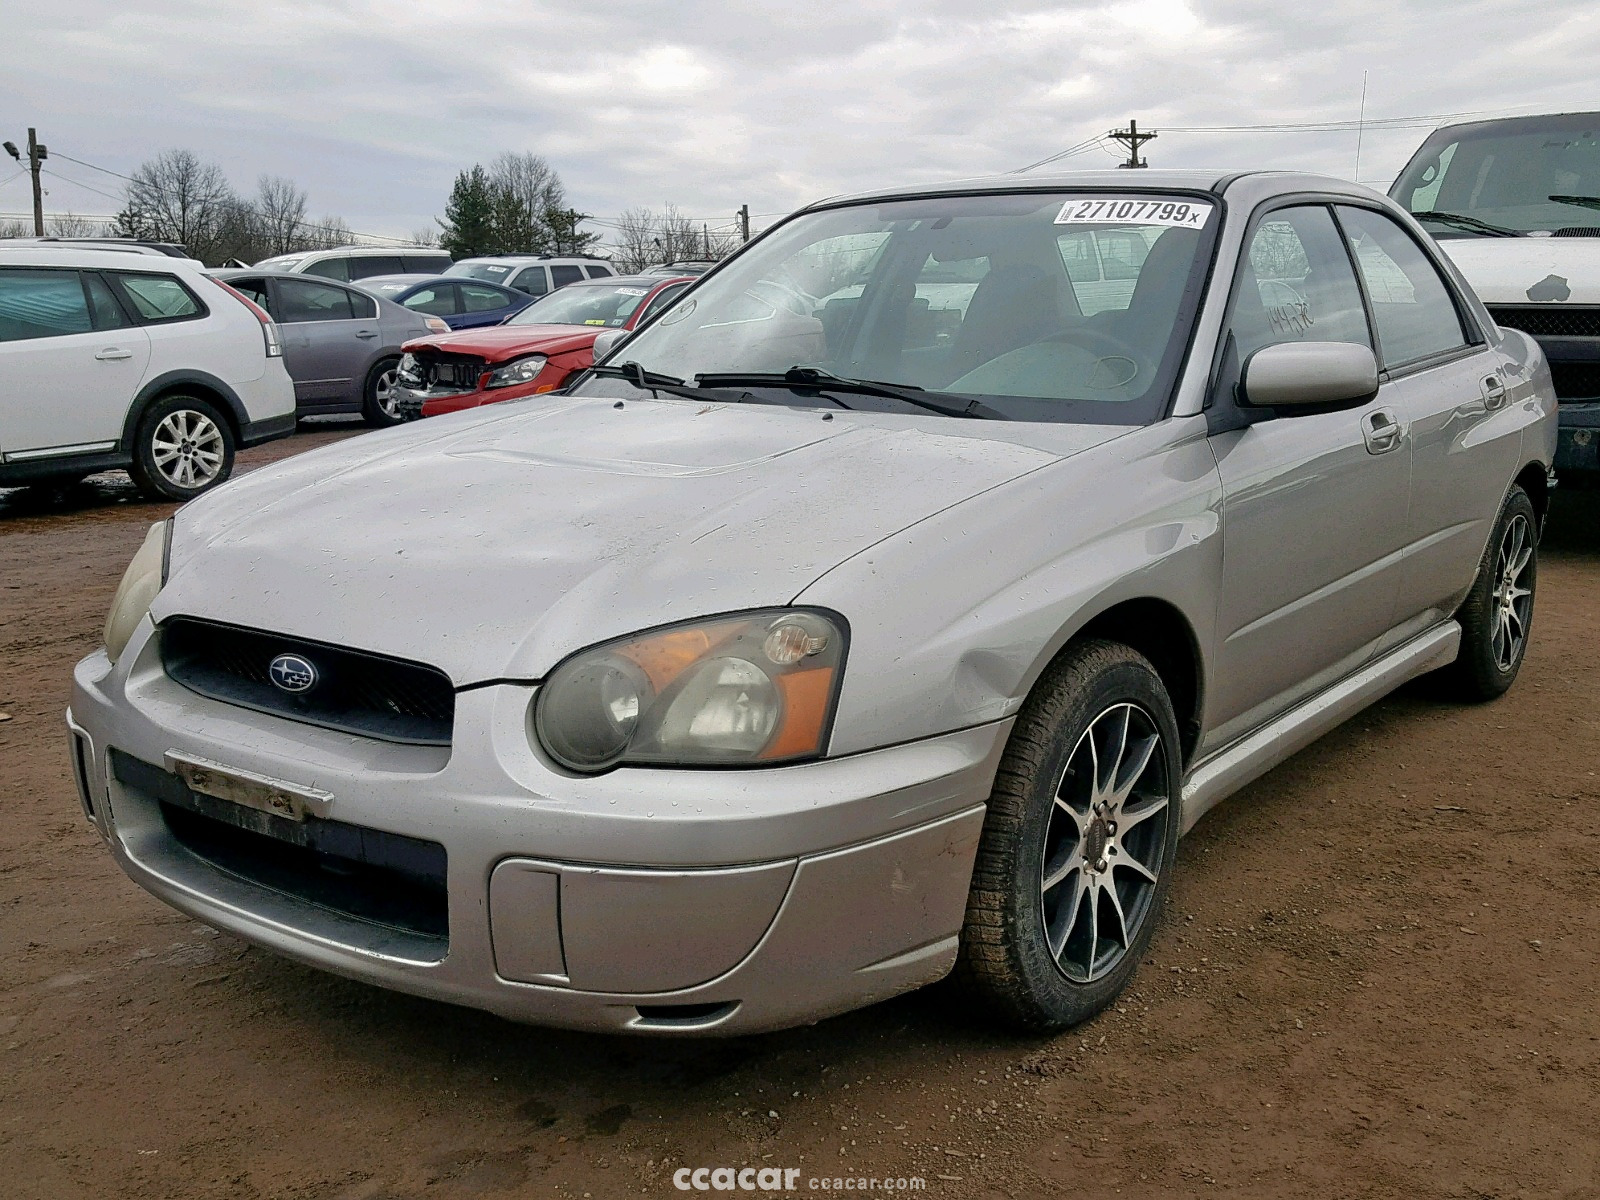 2005 Subaru Impreza 2.5 RS Salvage & Damaged Cars for Sale